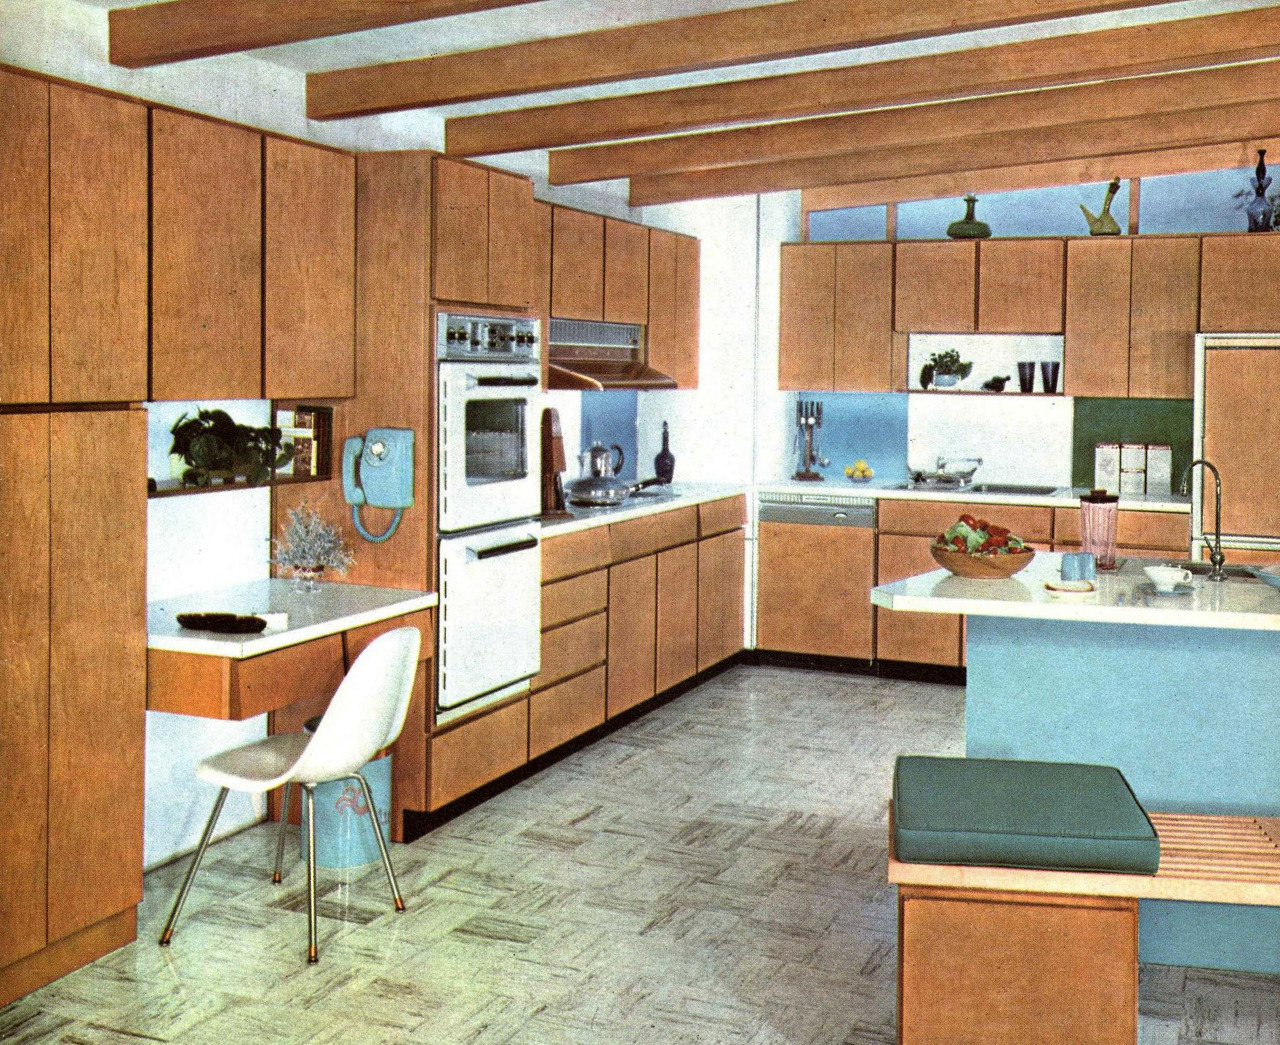 1960s kitchen design and colour